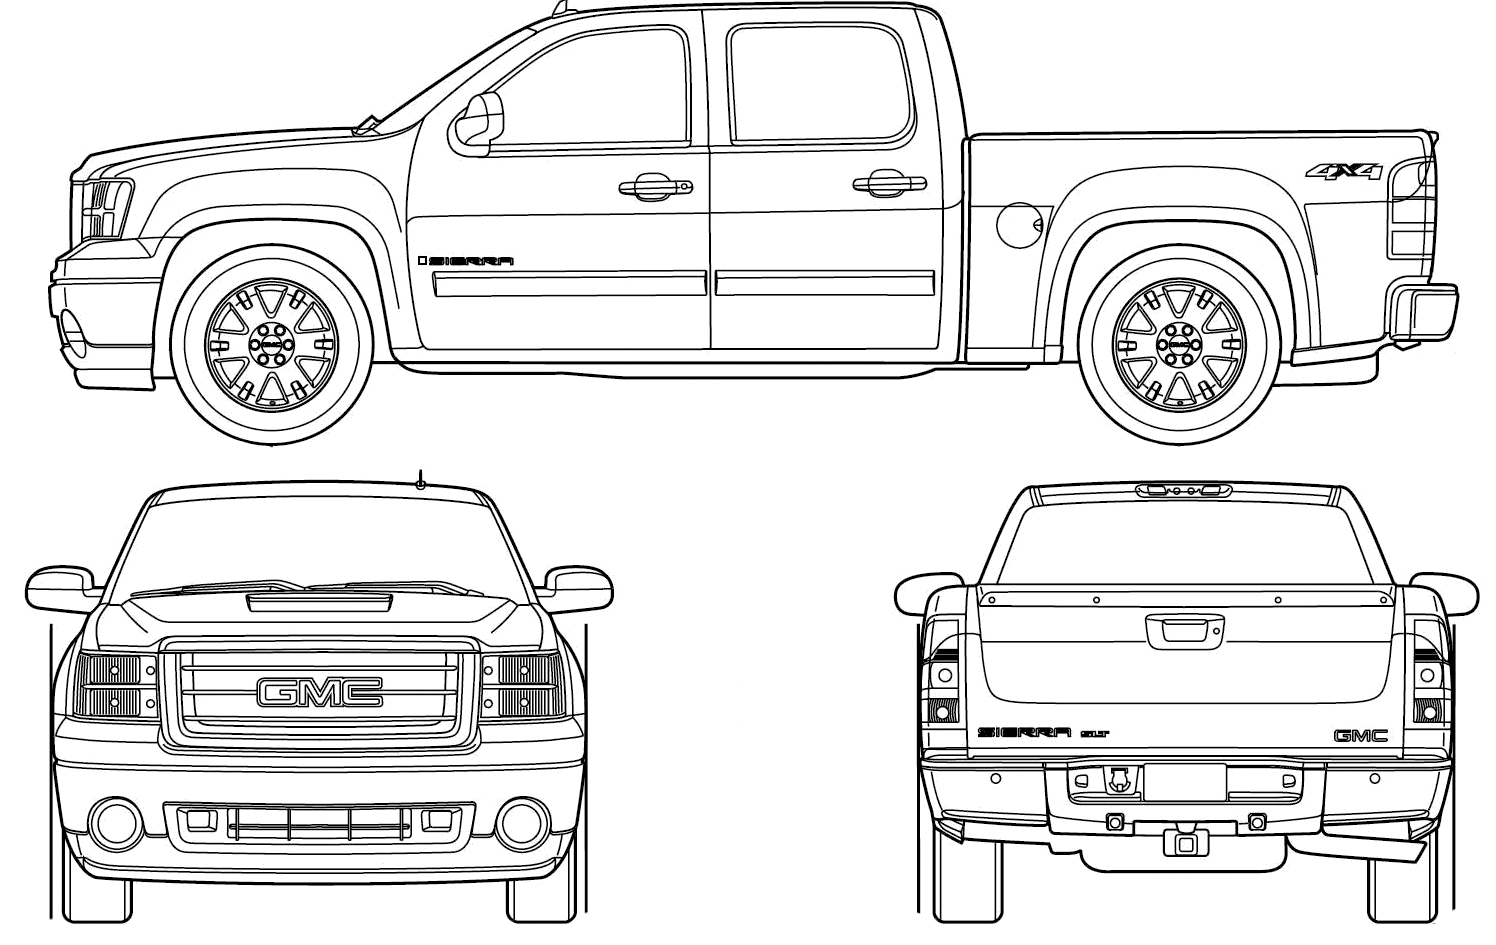 1998 GMC Sierra Pickup Truck blueprints free - Outlines.